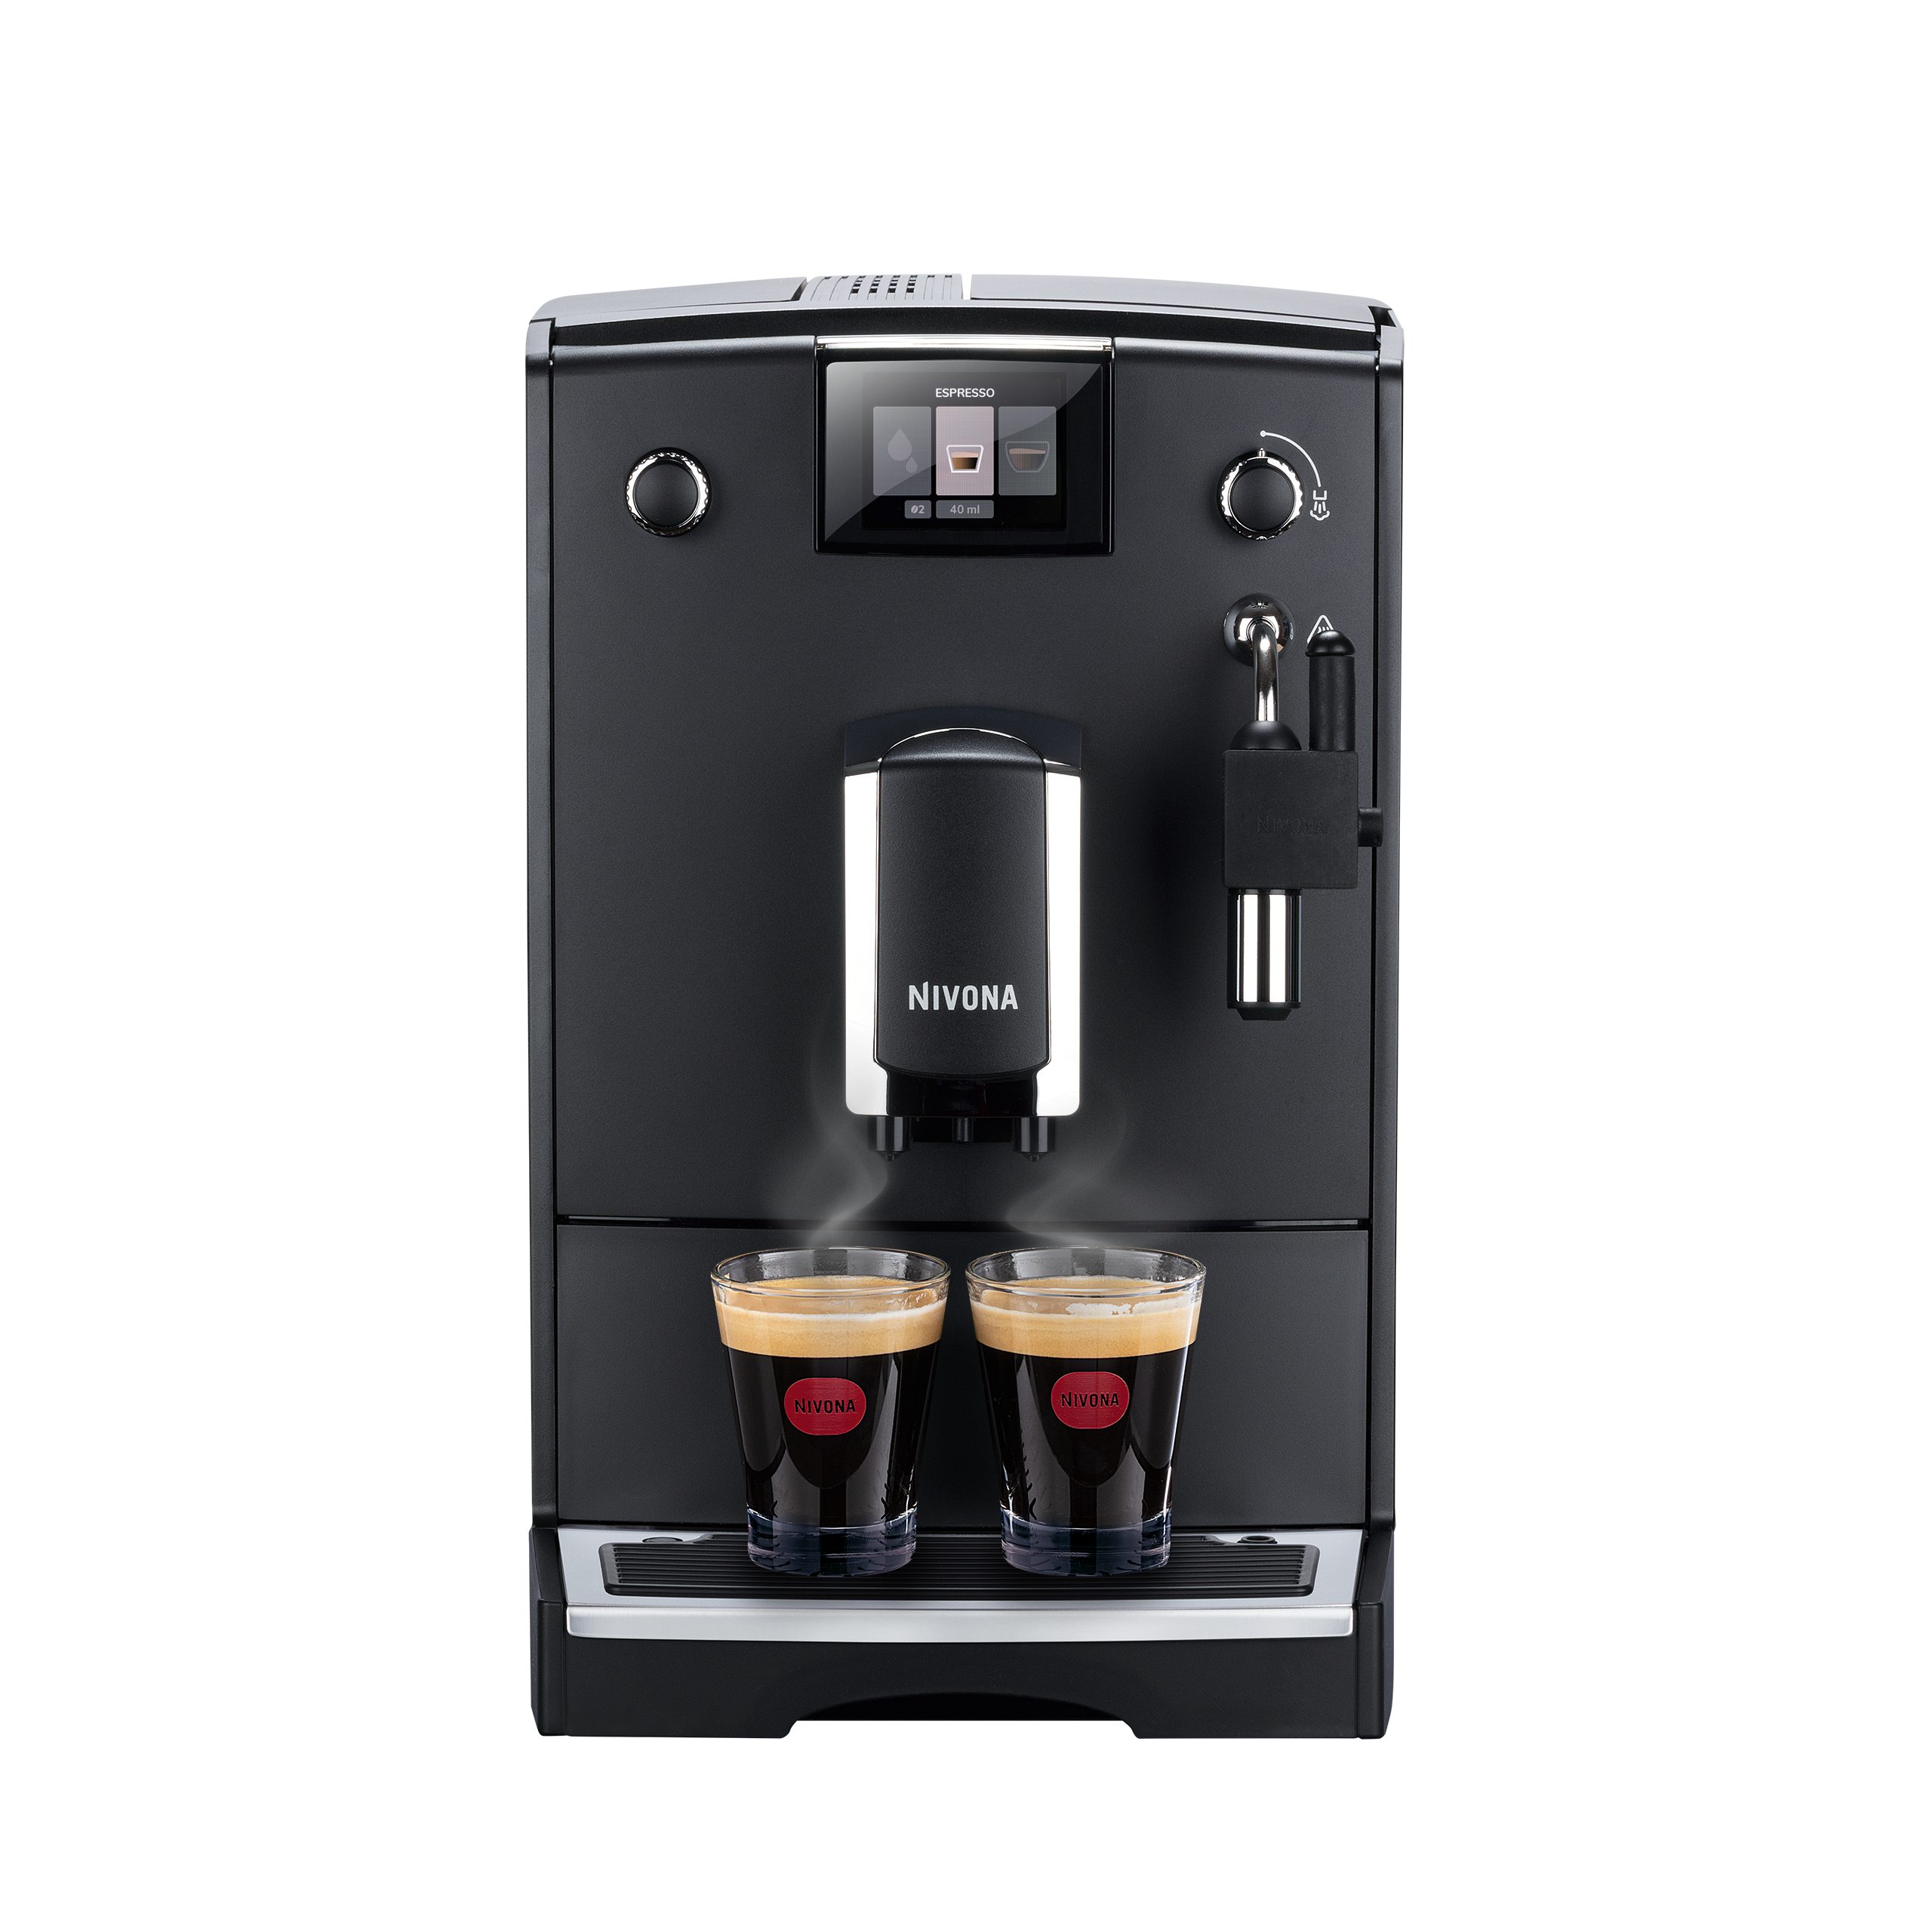 Nivona Kaffeevollautomat CafeRomatica NICR 550, 250 g Bohnenbehälter